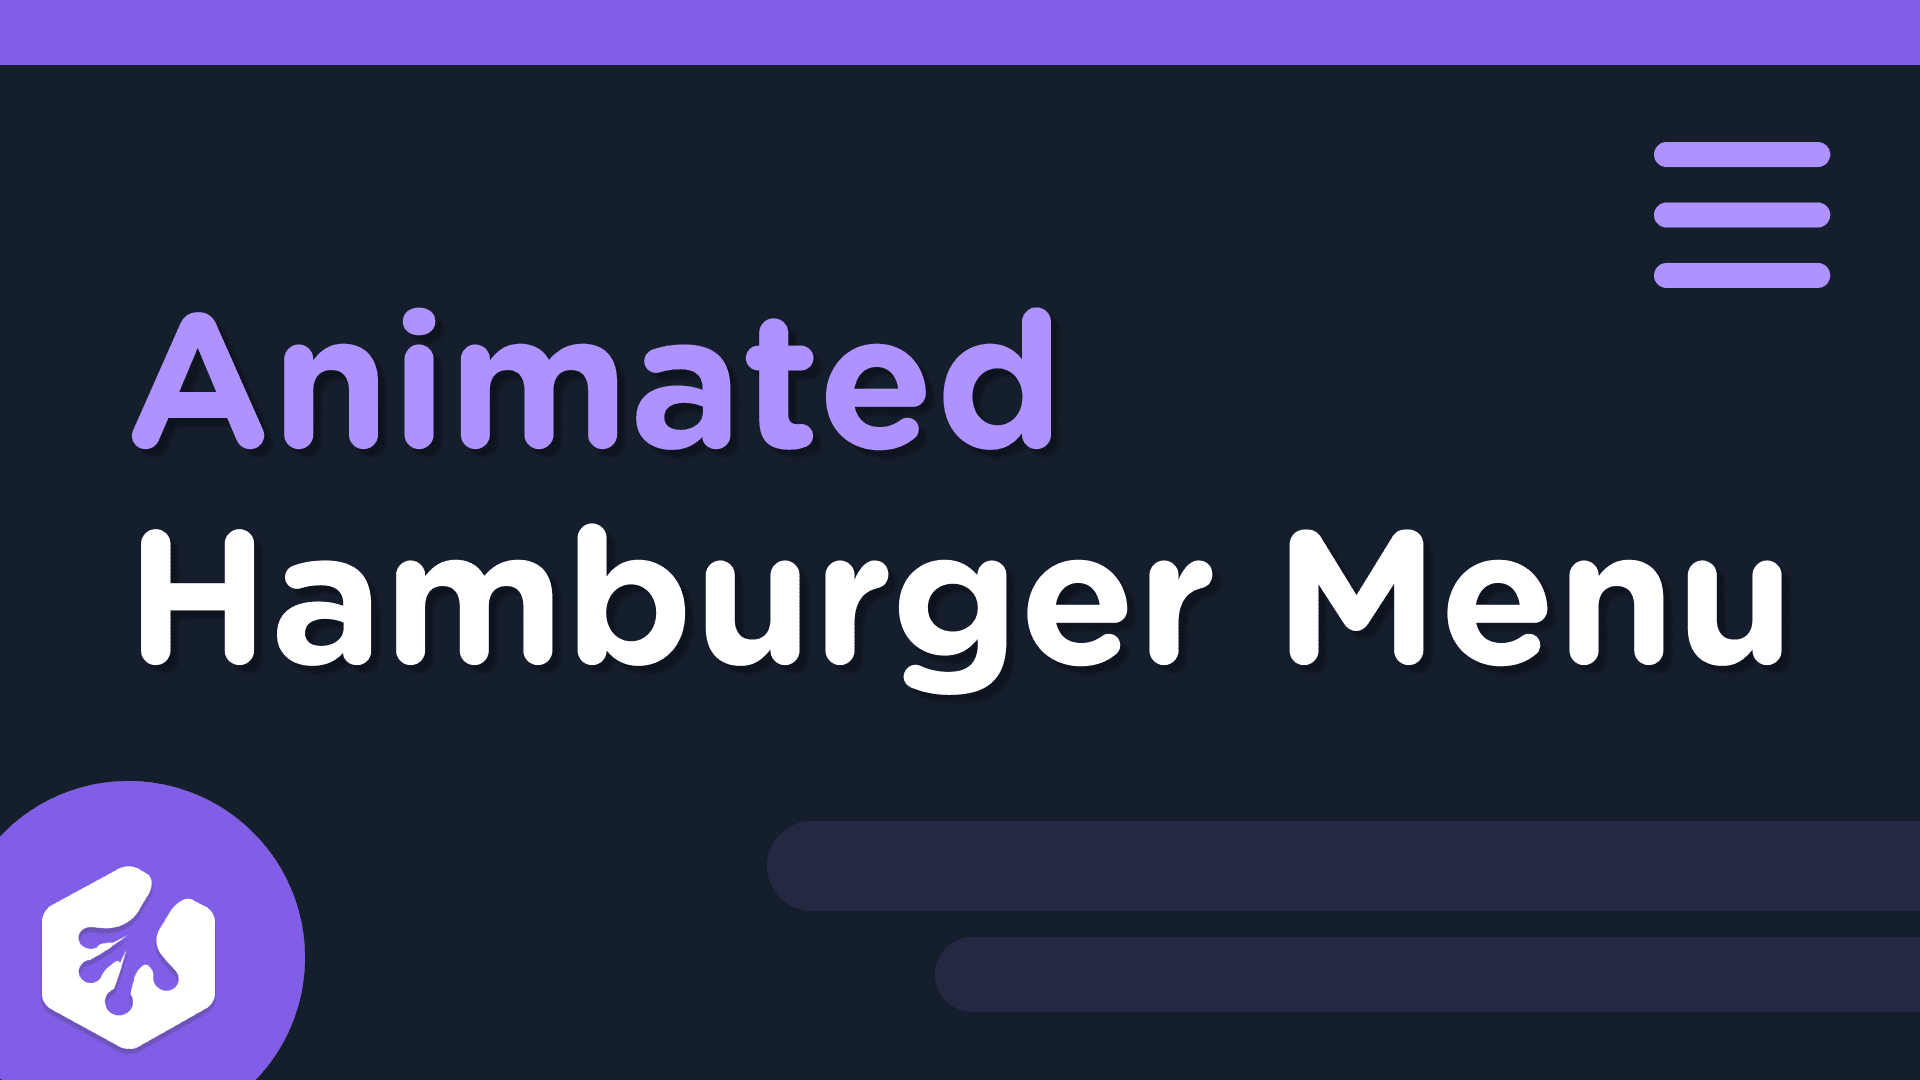 Animated Hamburger Menu [Article] | Treehouse Blog